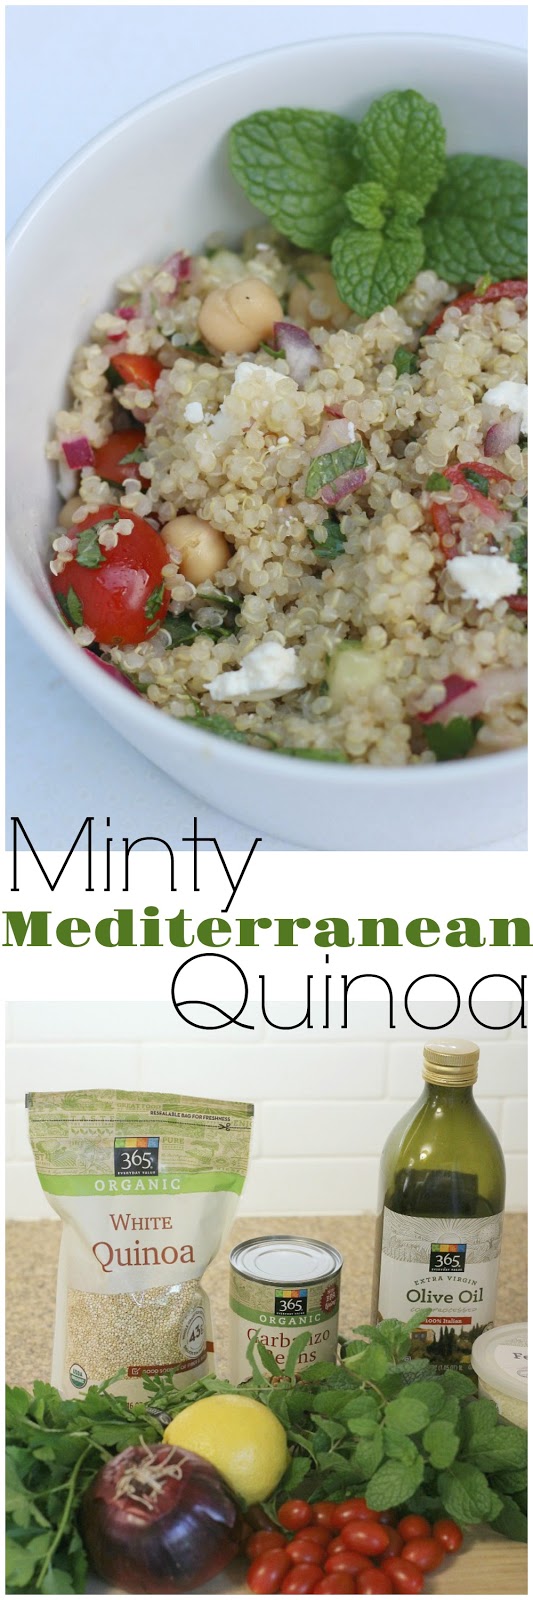 Healthy vegetarian quinoa recipe